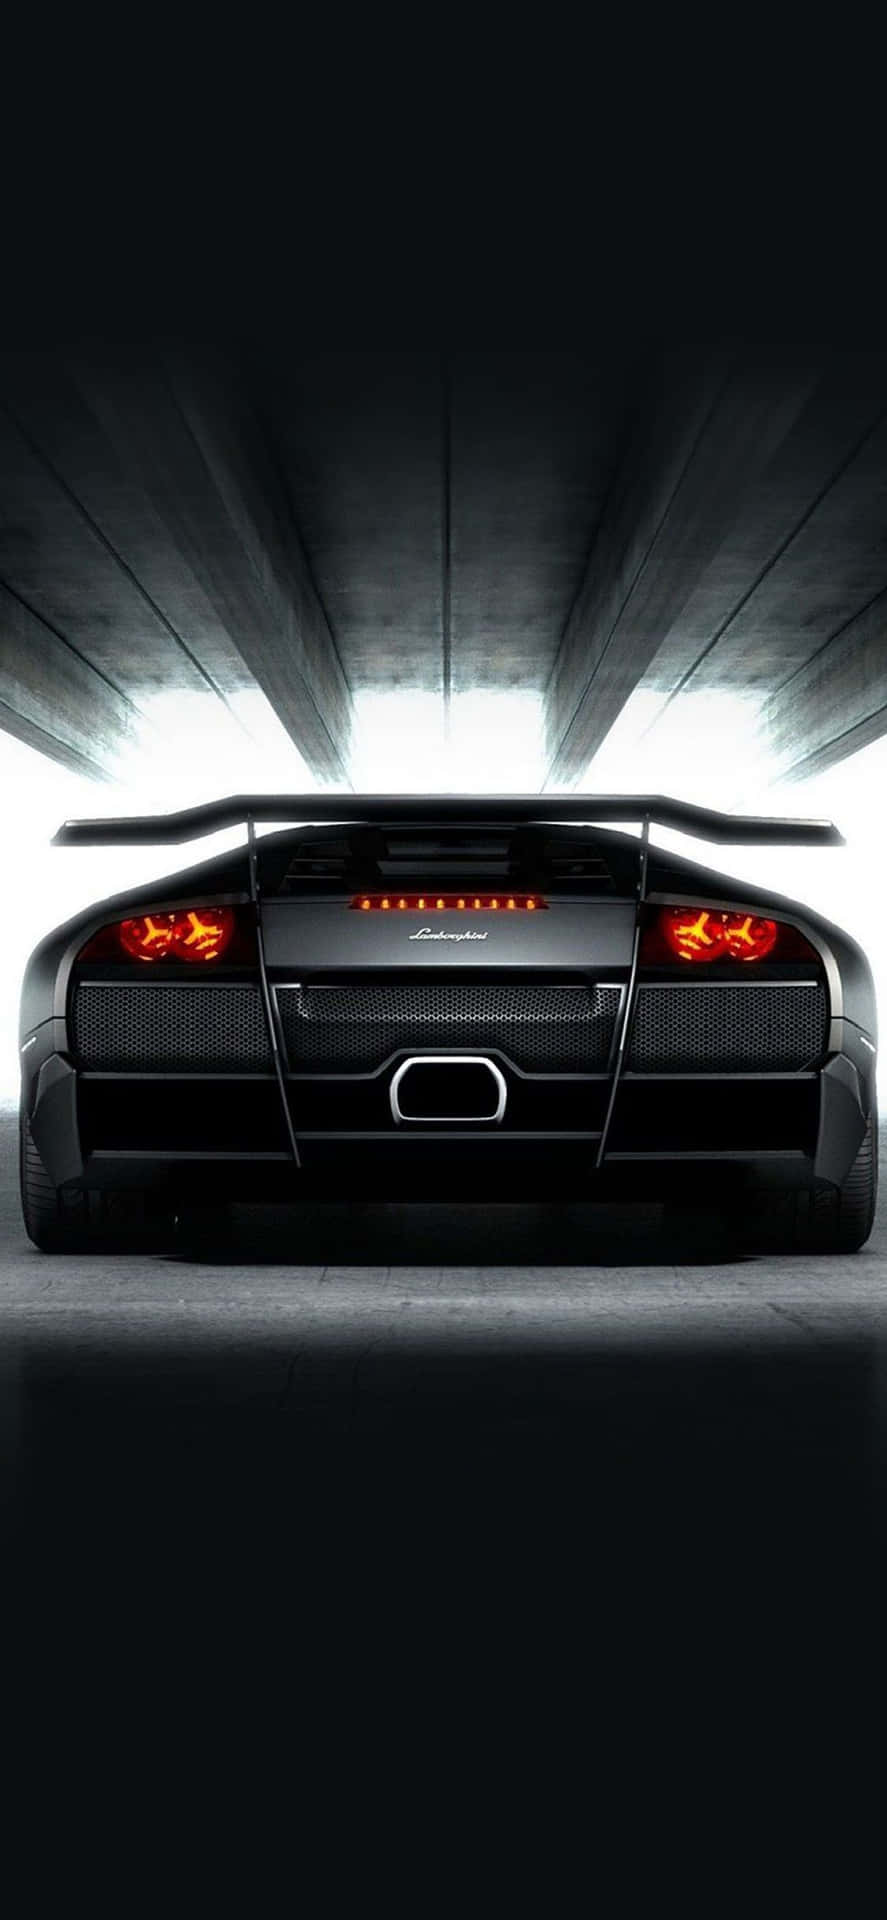 Luxury experience - own a Black Lamborghini smartphone Wallpaper